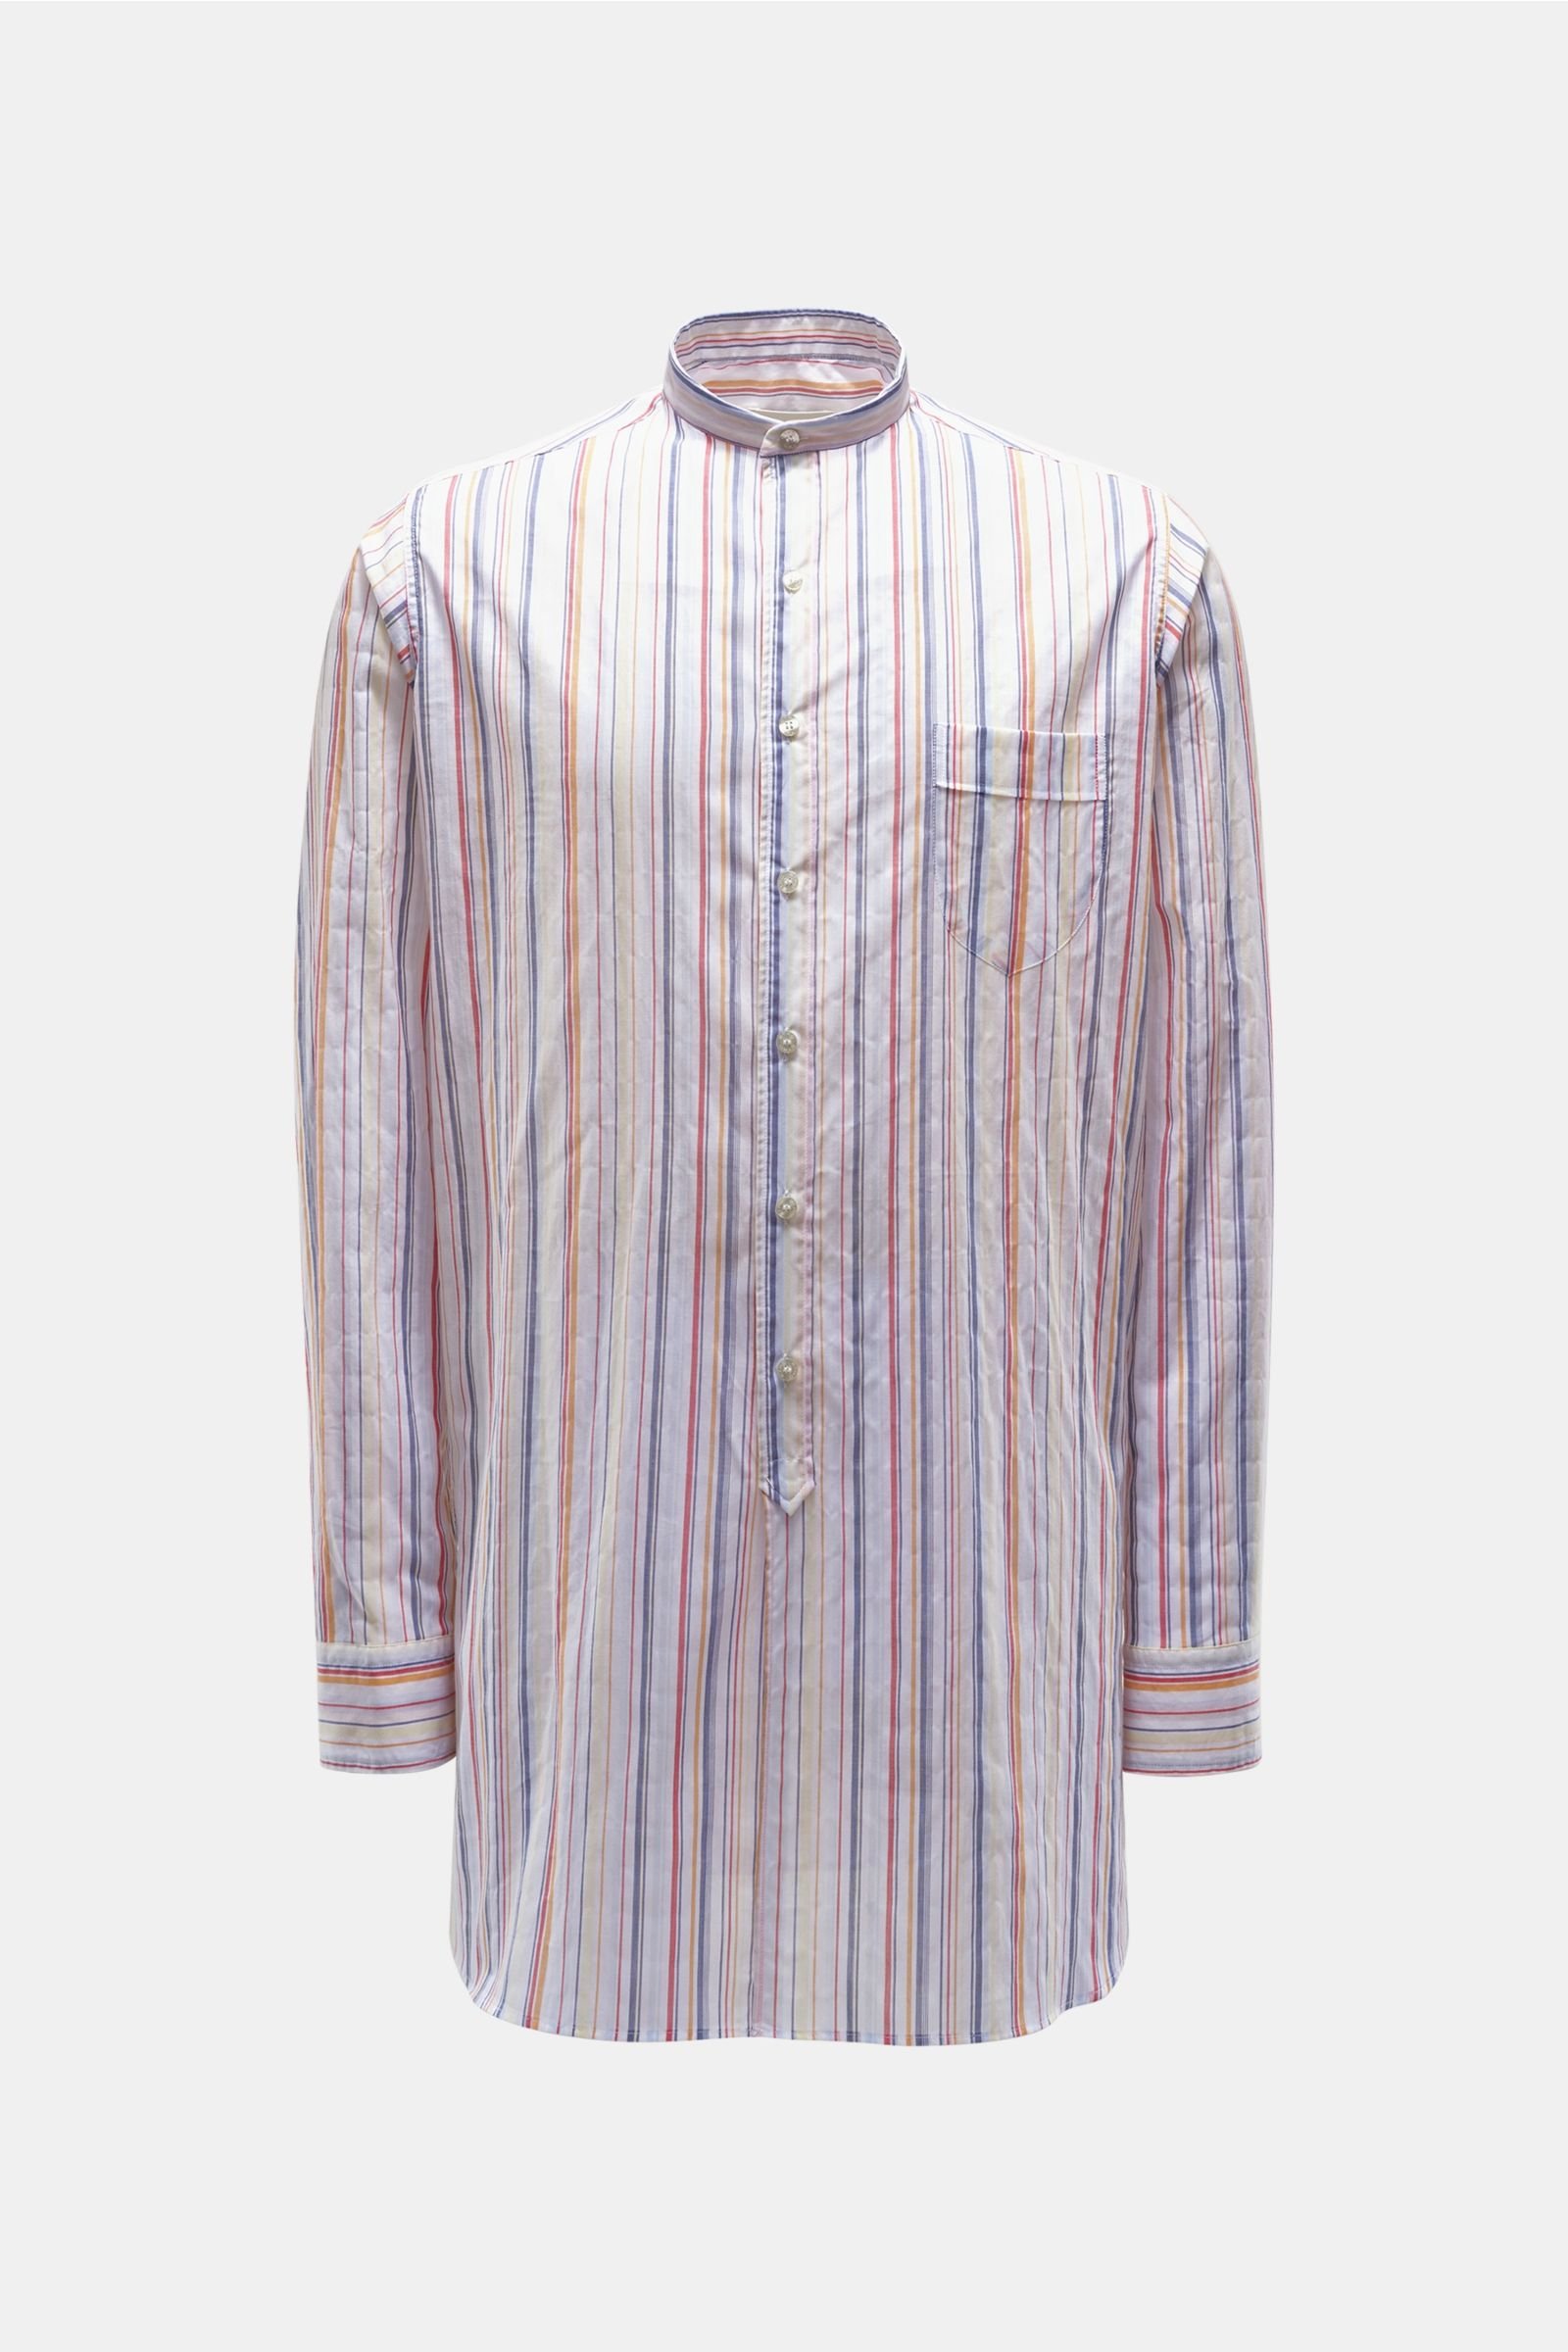 Casual shirt grandad collar grey-blue/orange/white striped